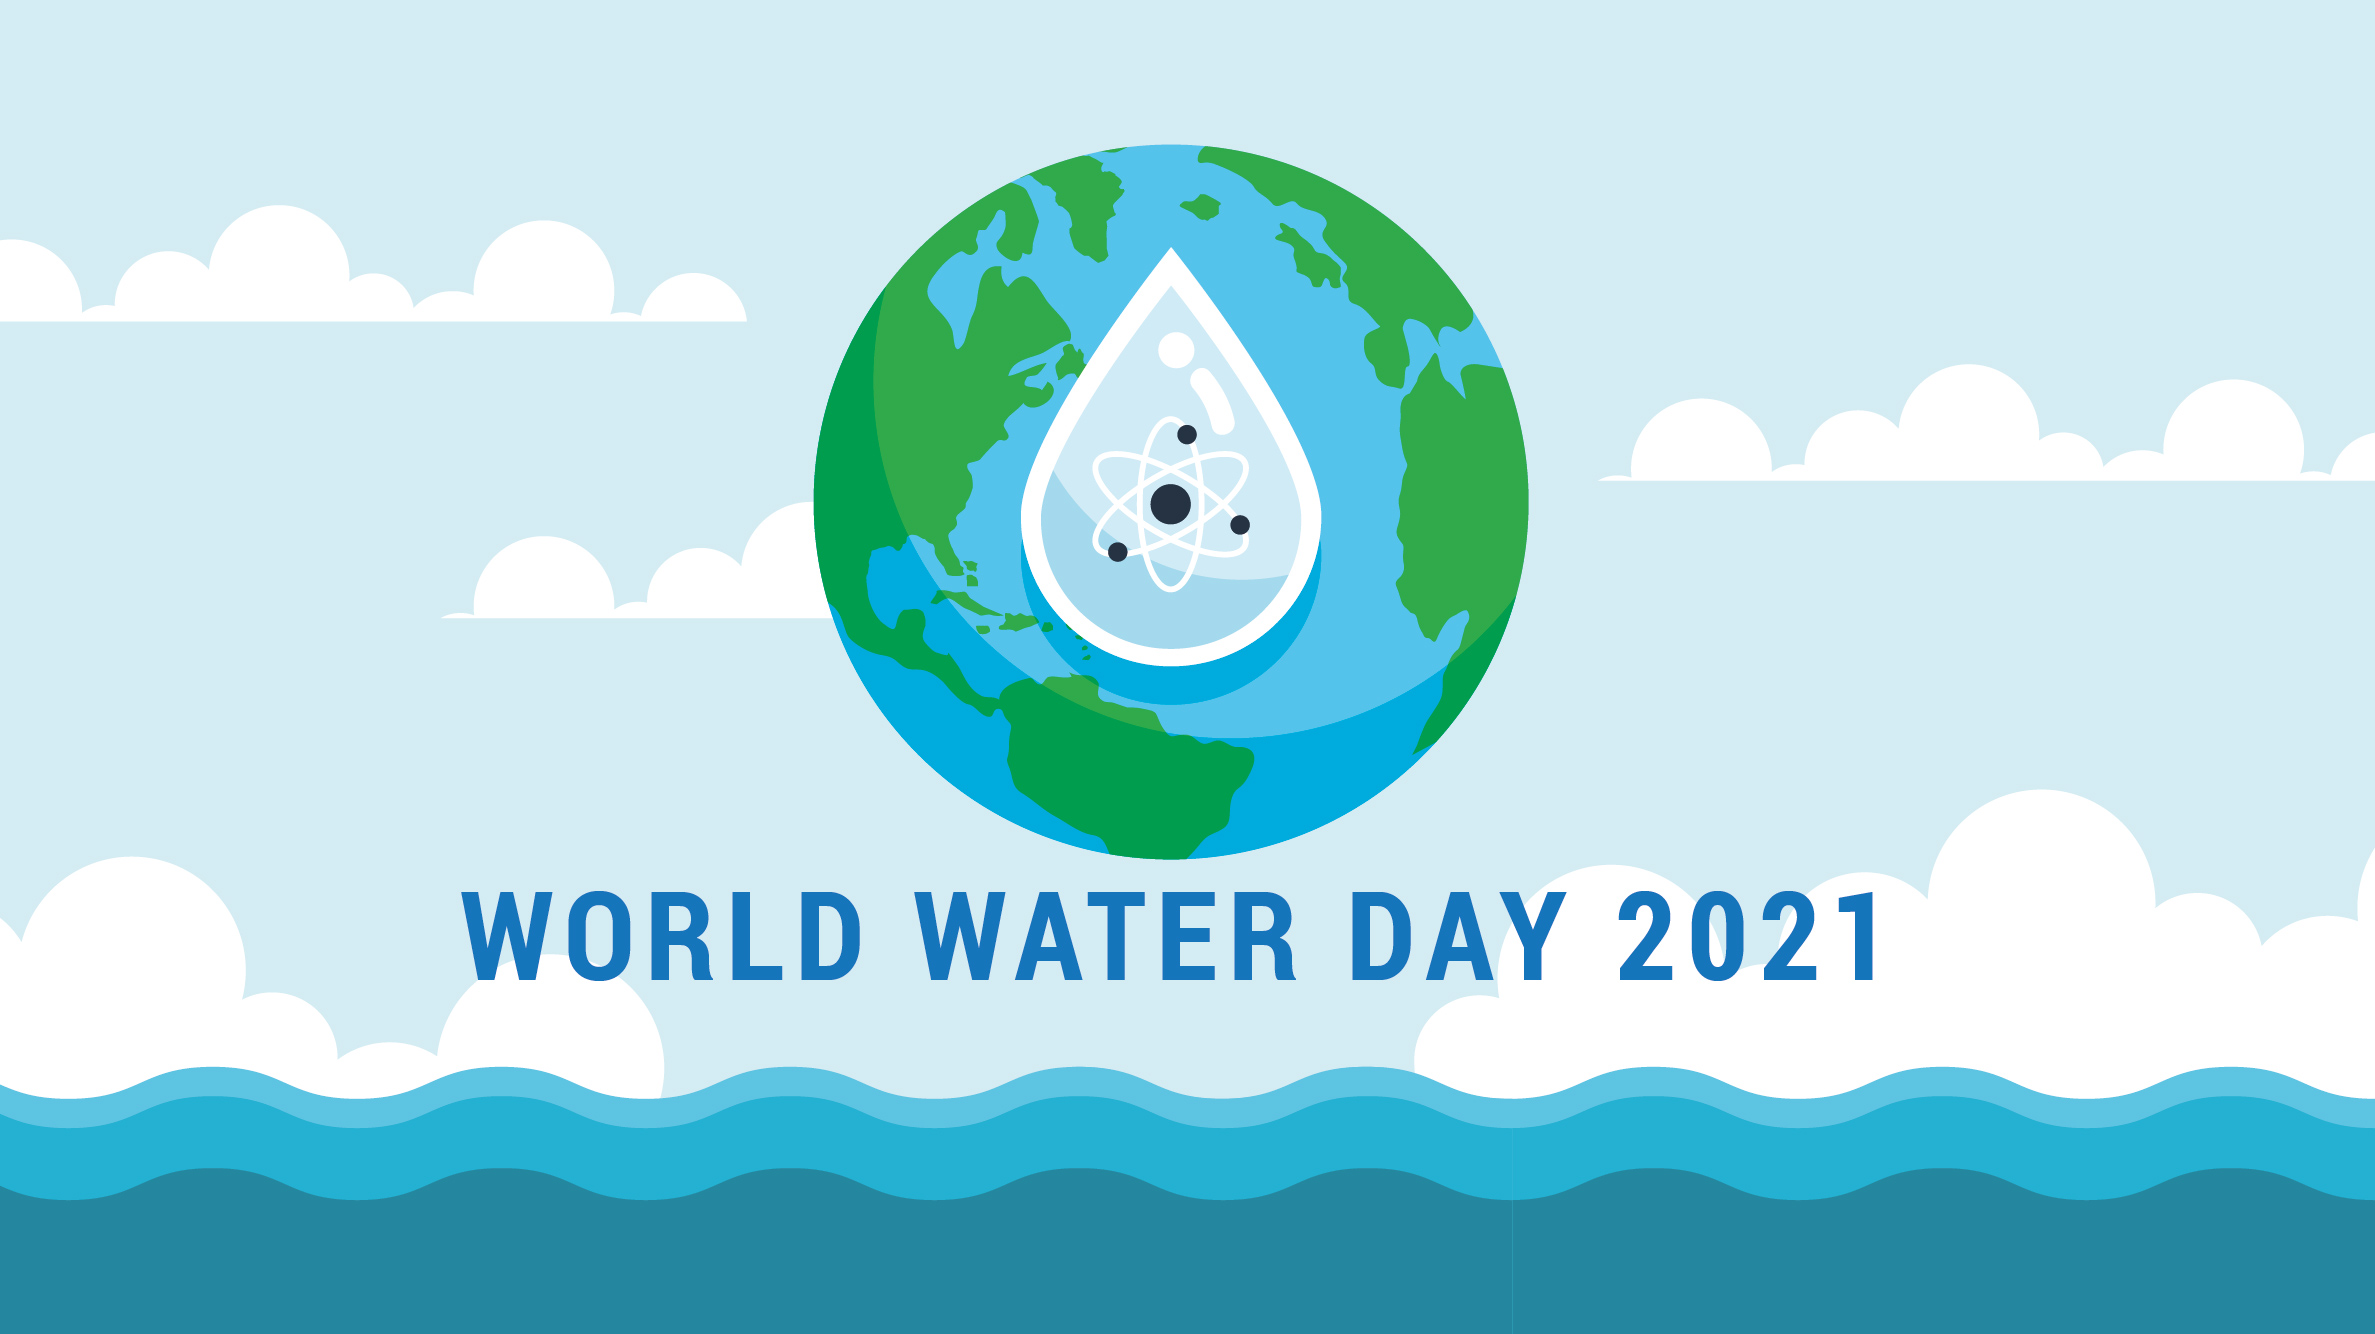 World Water Day | World water day, Water day, Graphic design ads